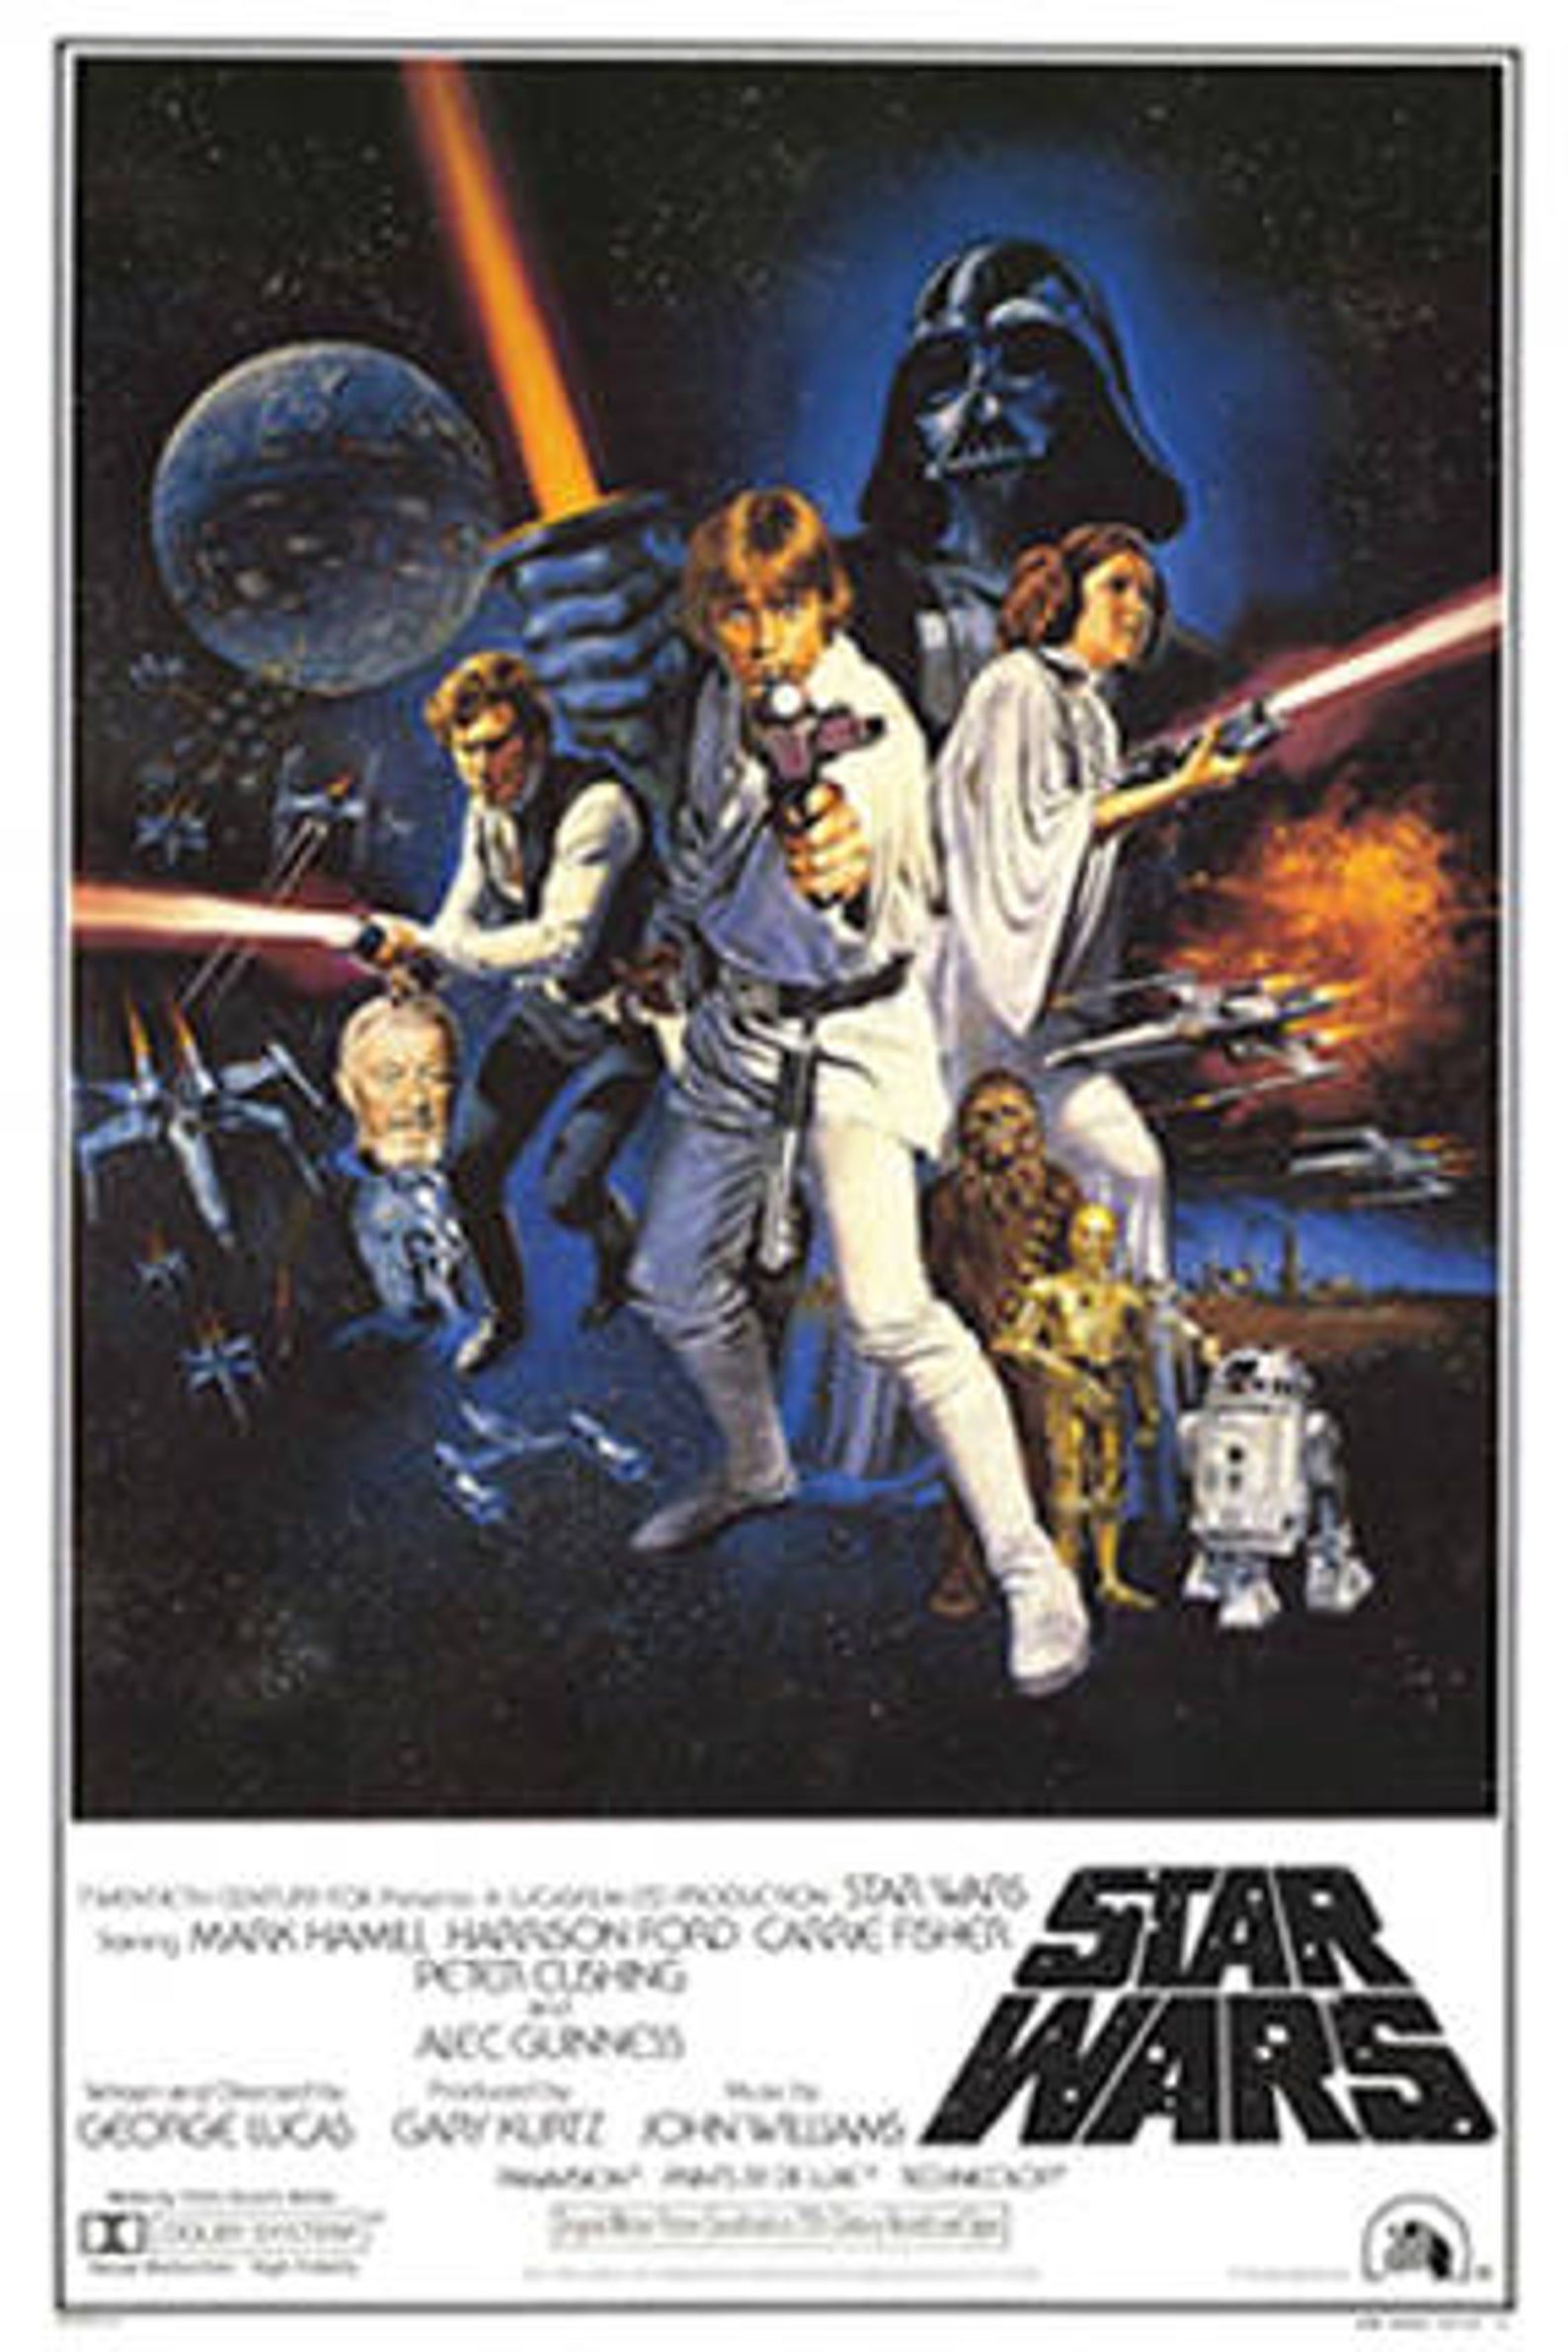 Star Wars Vintage Movie Poster 24x36. Etsy. Star wars